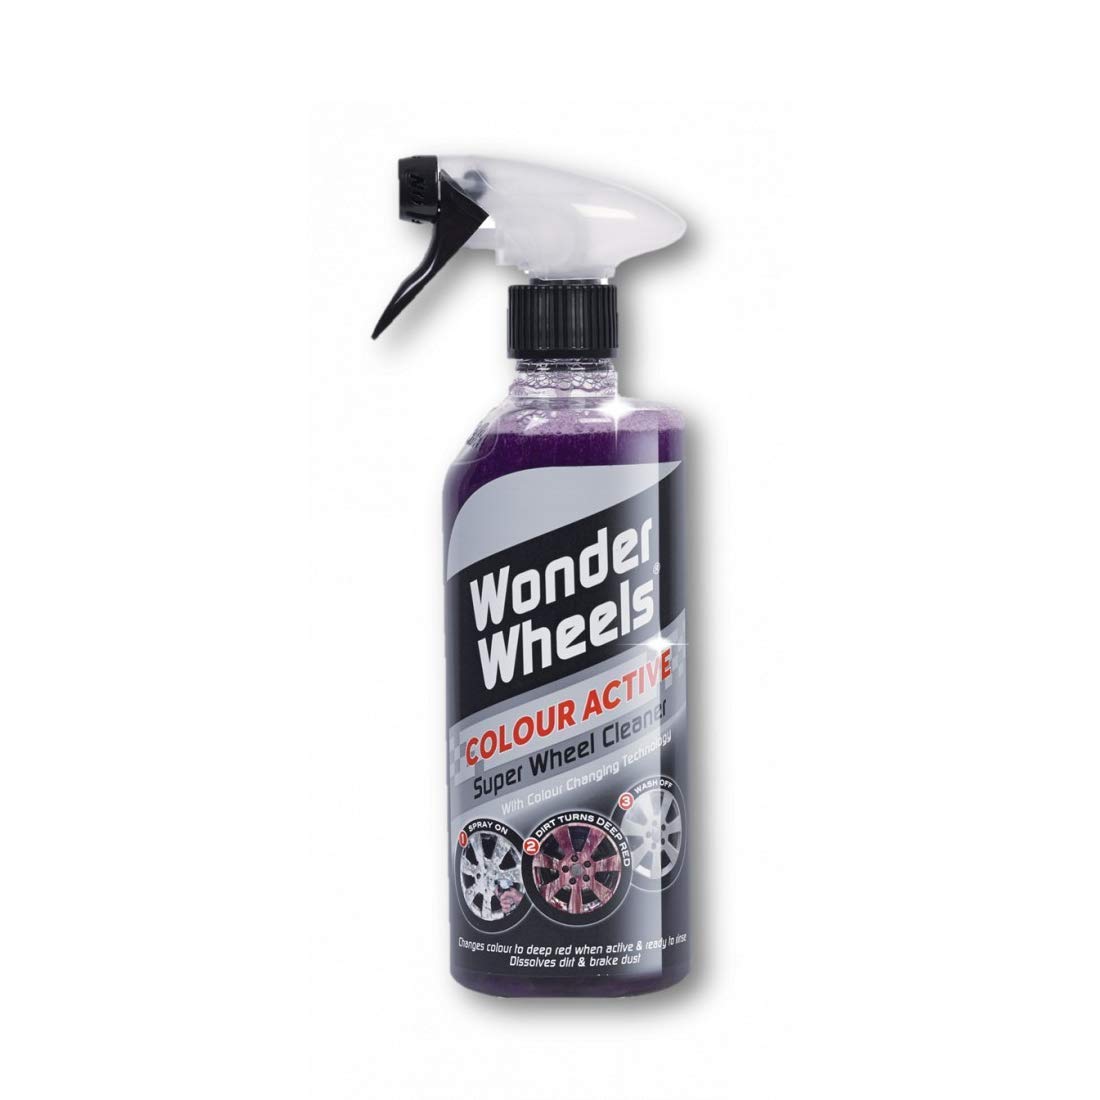 Wonder Wheels Colour Active Wheel Cleaner - 600ml